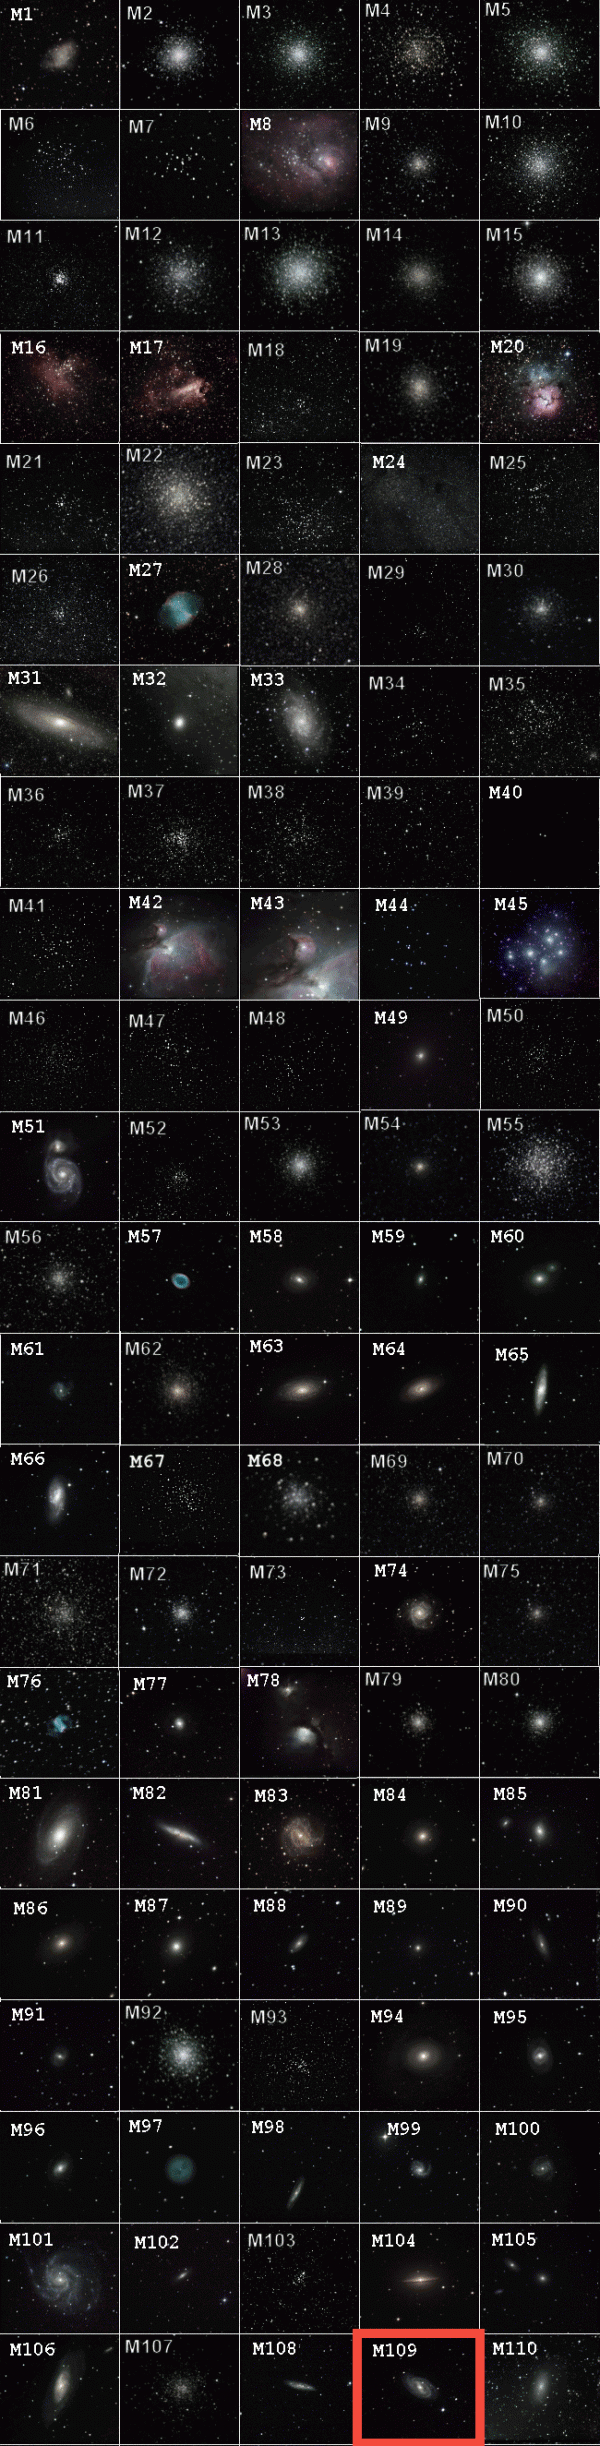 Image credit: Tenho Tuomi of Tuomi Observatory, via http://www.lex.sk.ca/astro/.